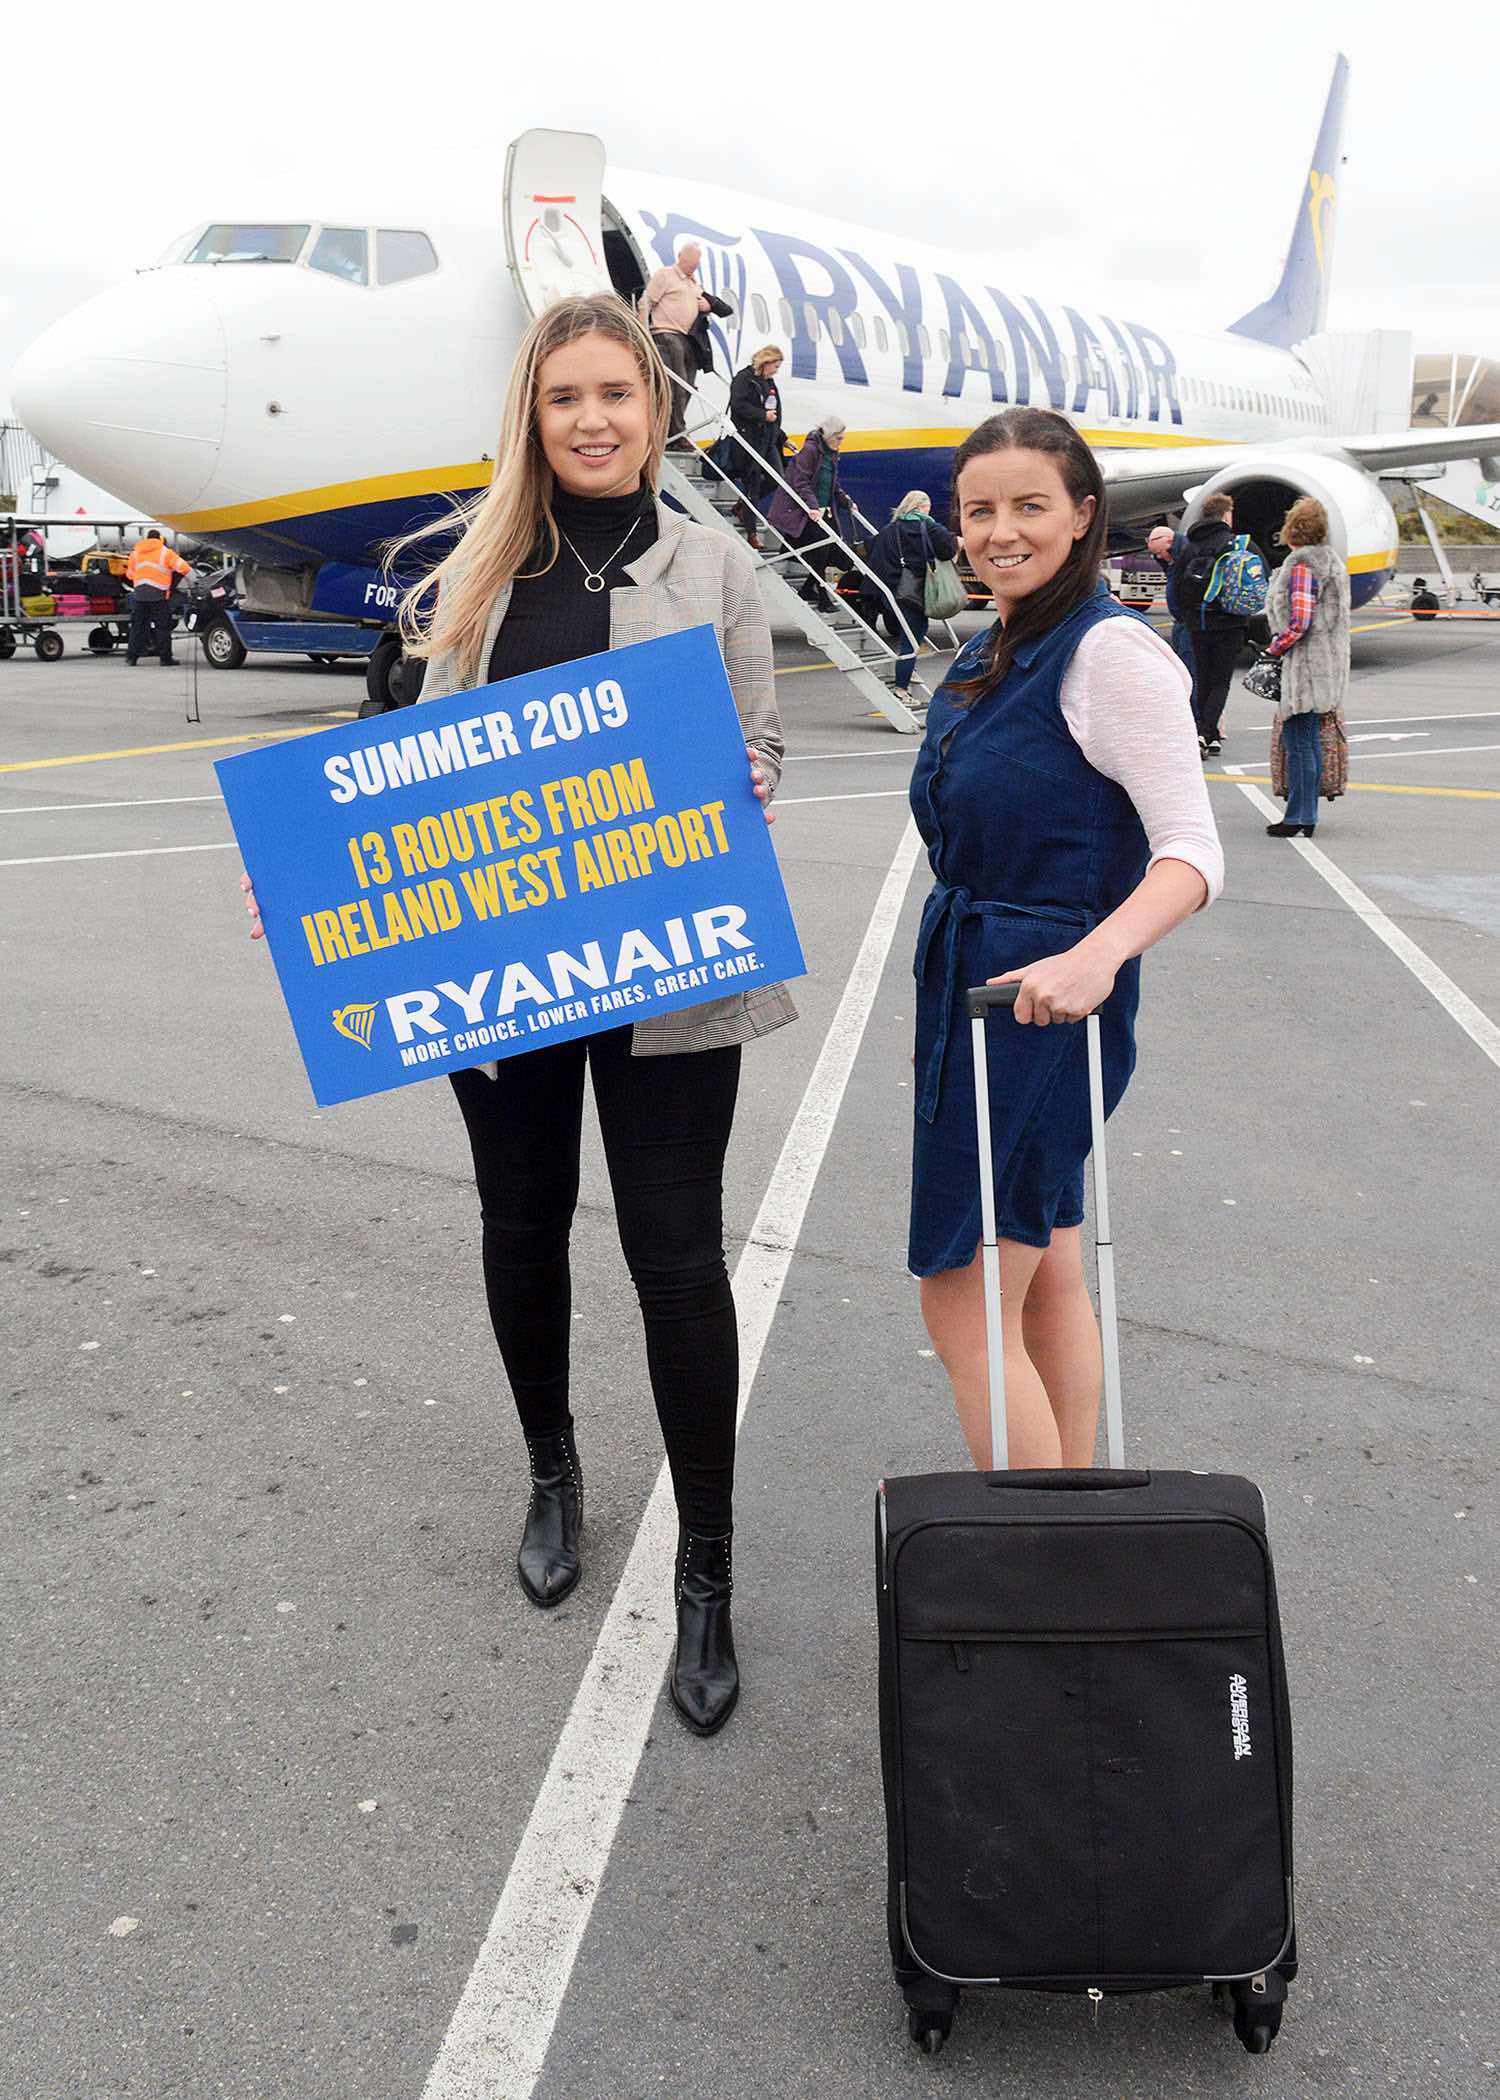 Ryanair’s Ireland West Airport Knock Summer 2019 Schedule Takes Off